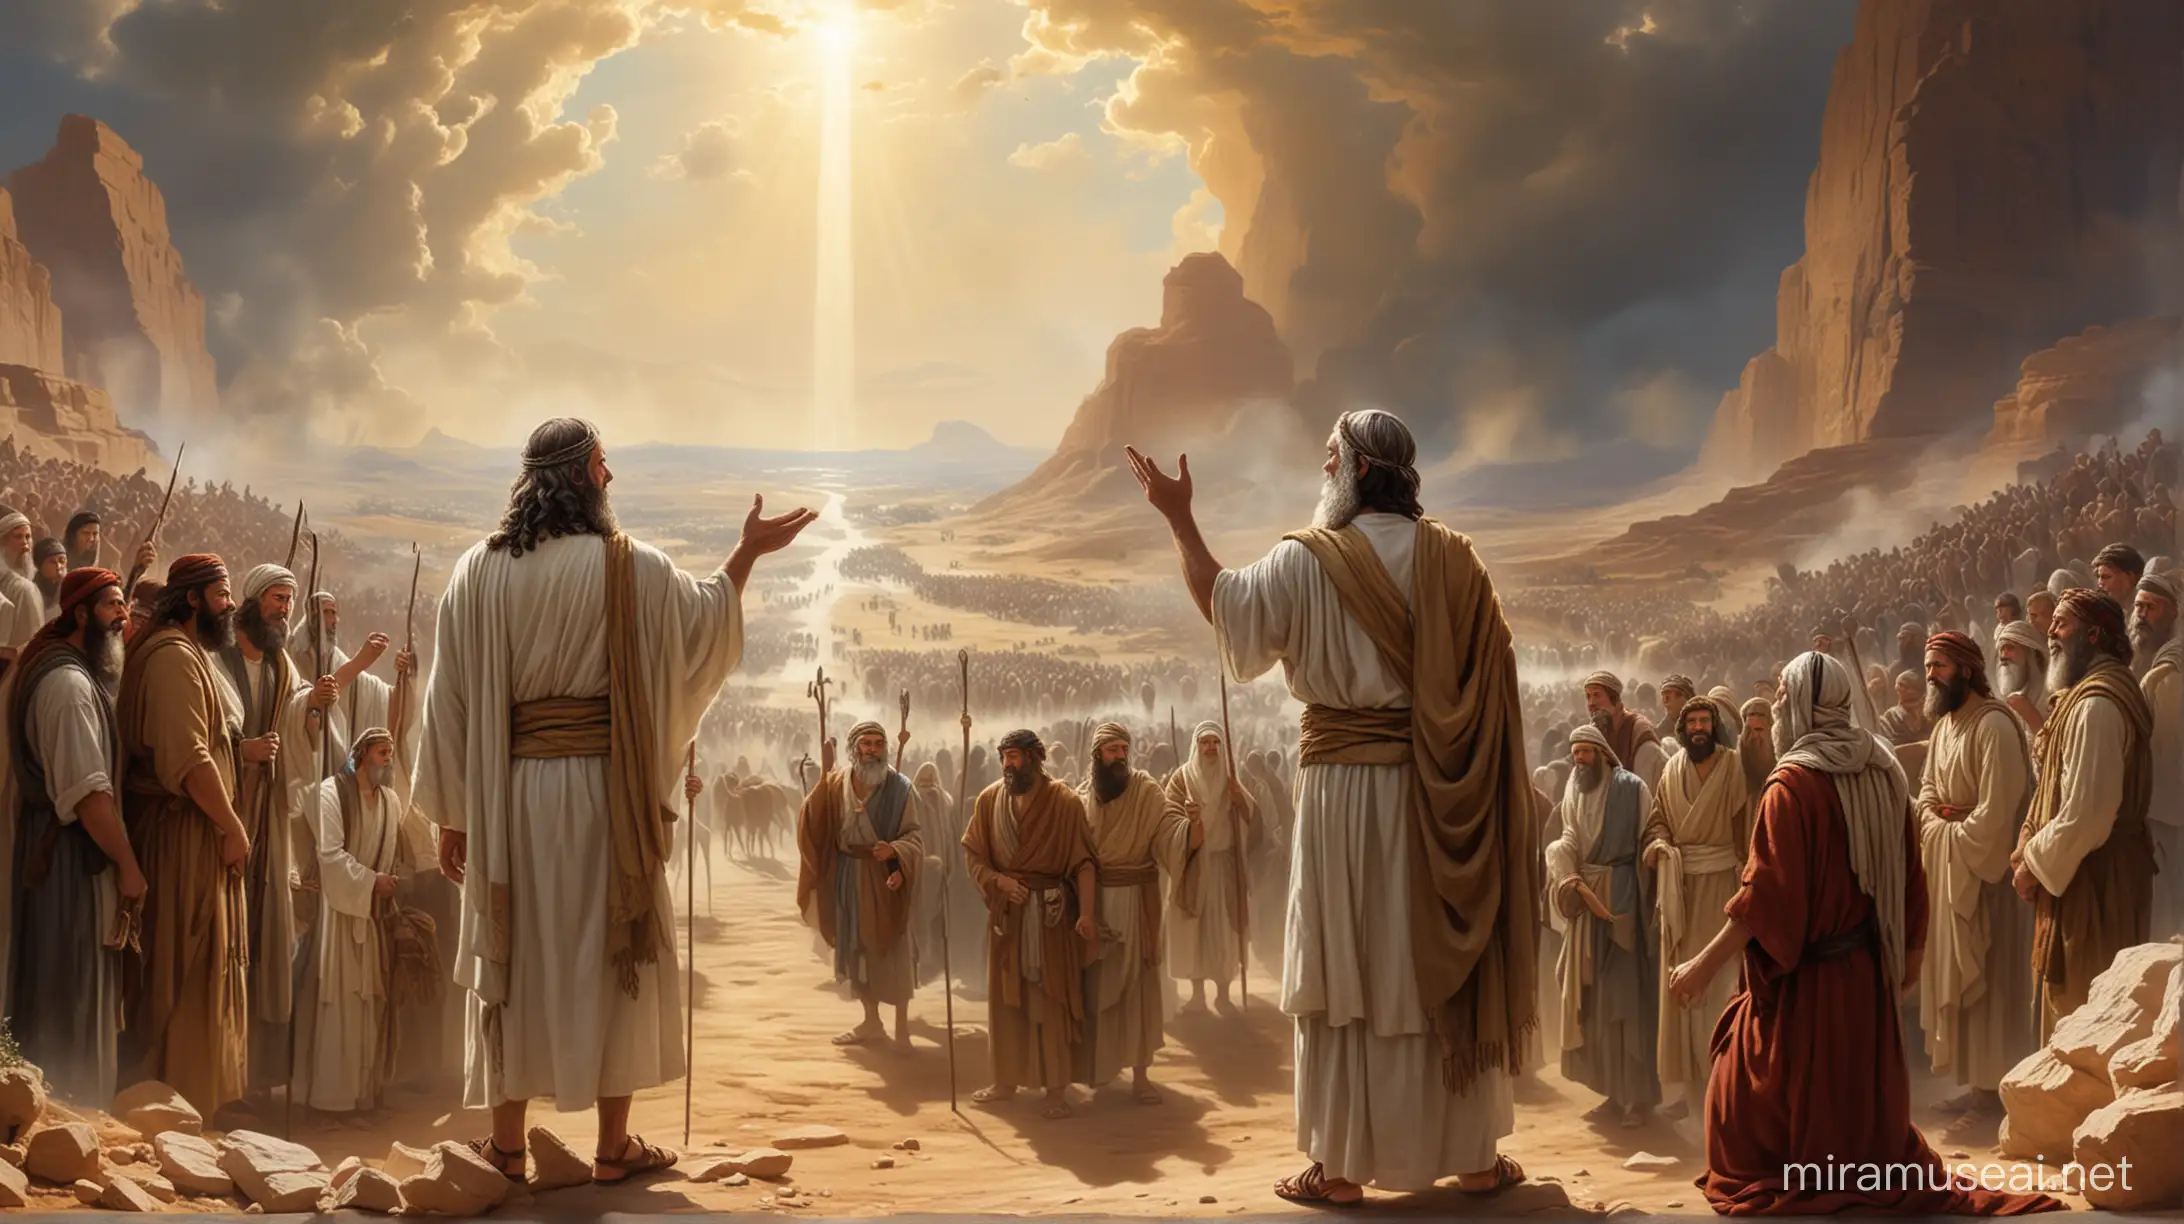 Moses and Aaron Speak to God regarding the Israeli people